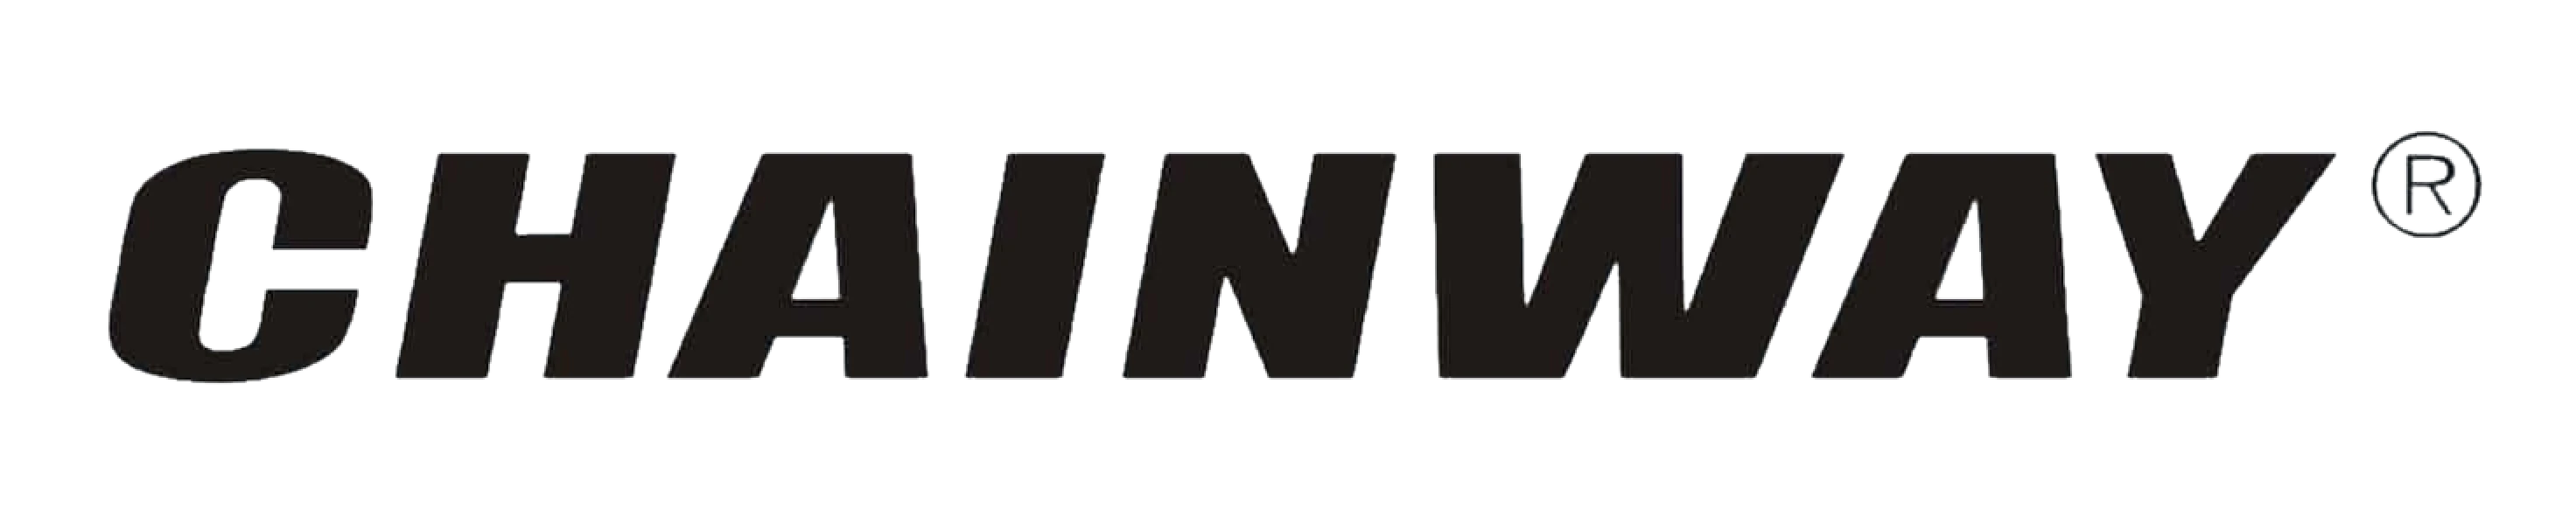 Chainway Compan Logo